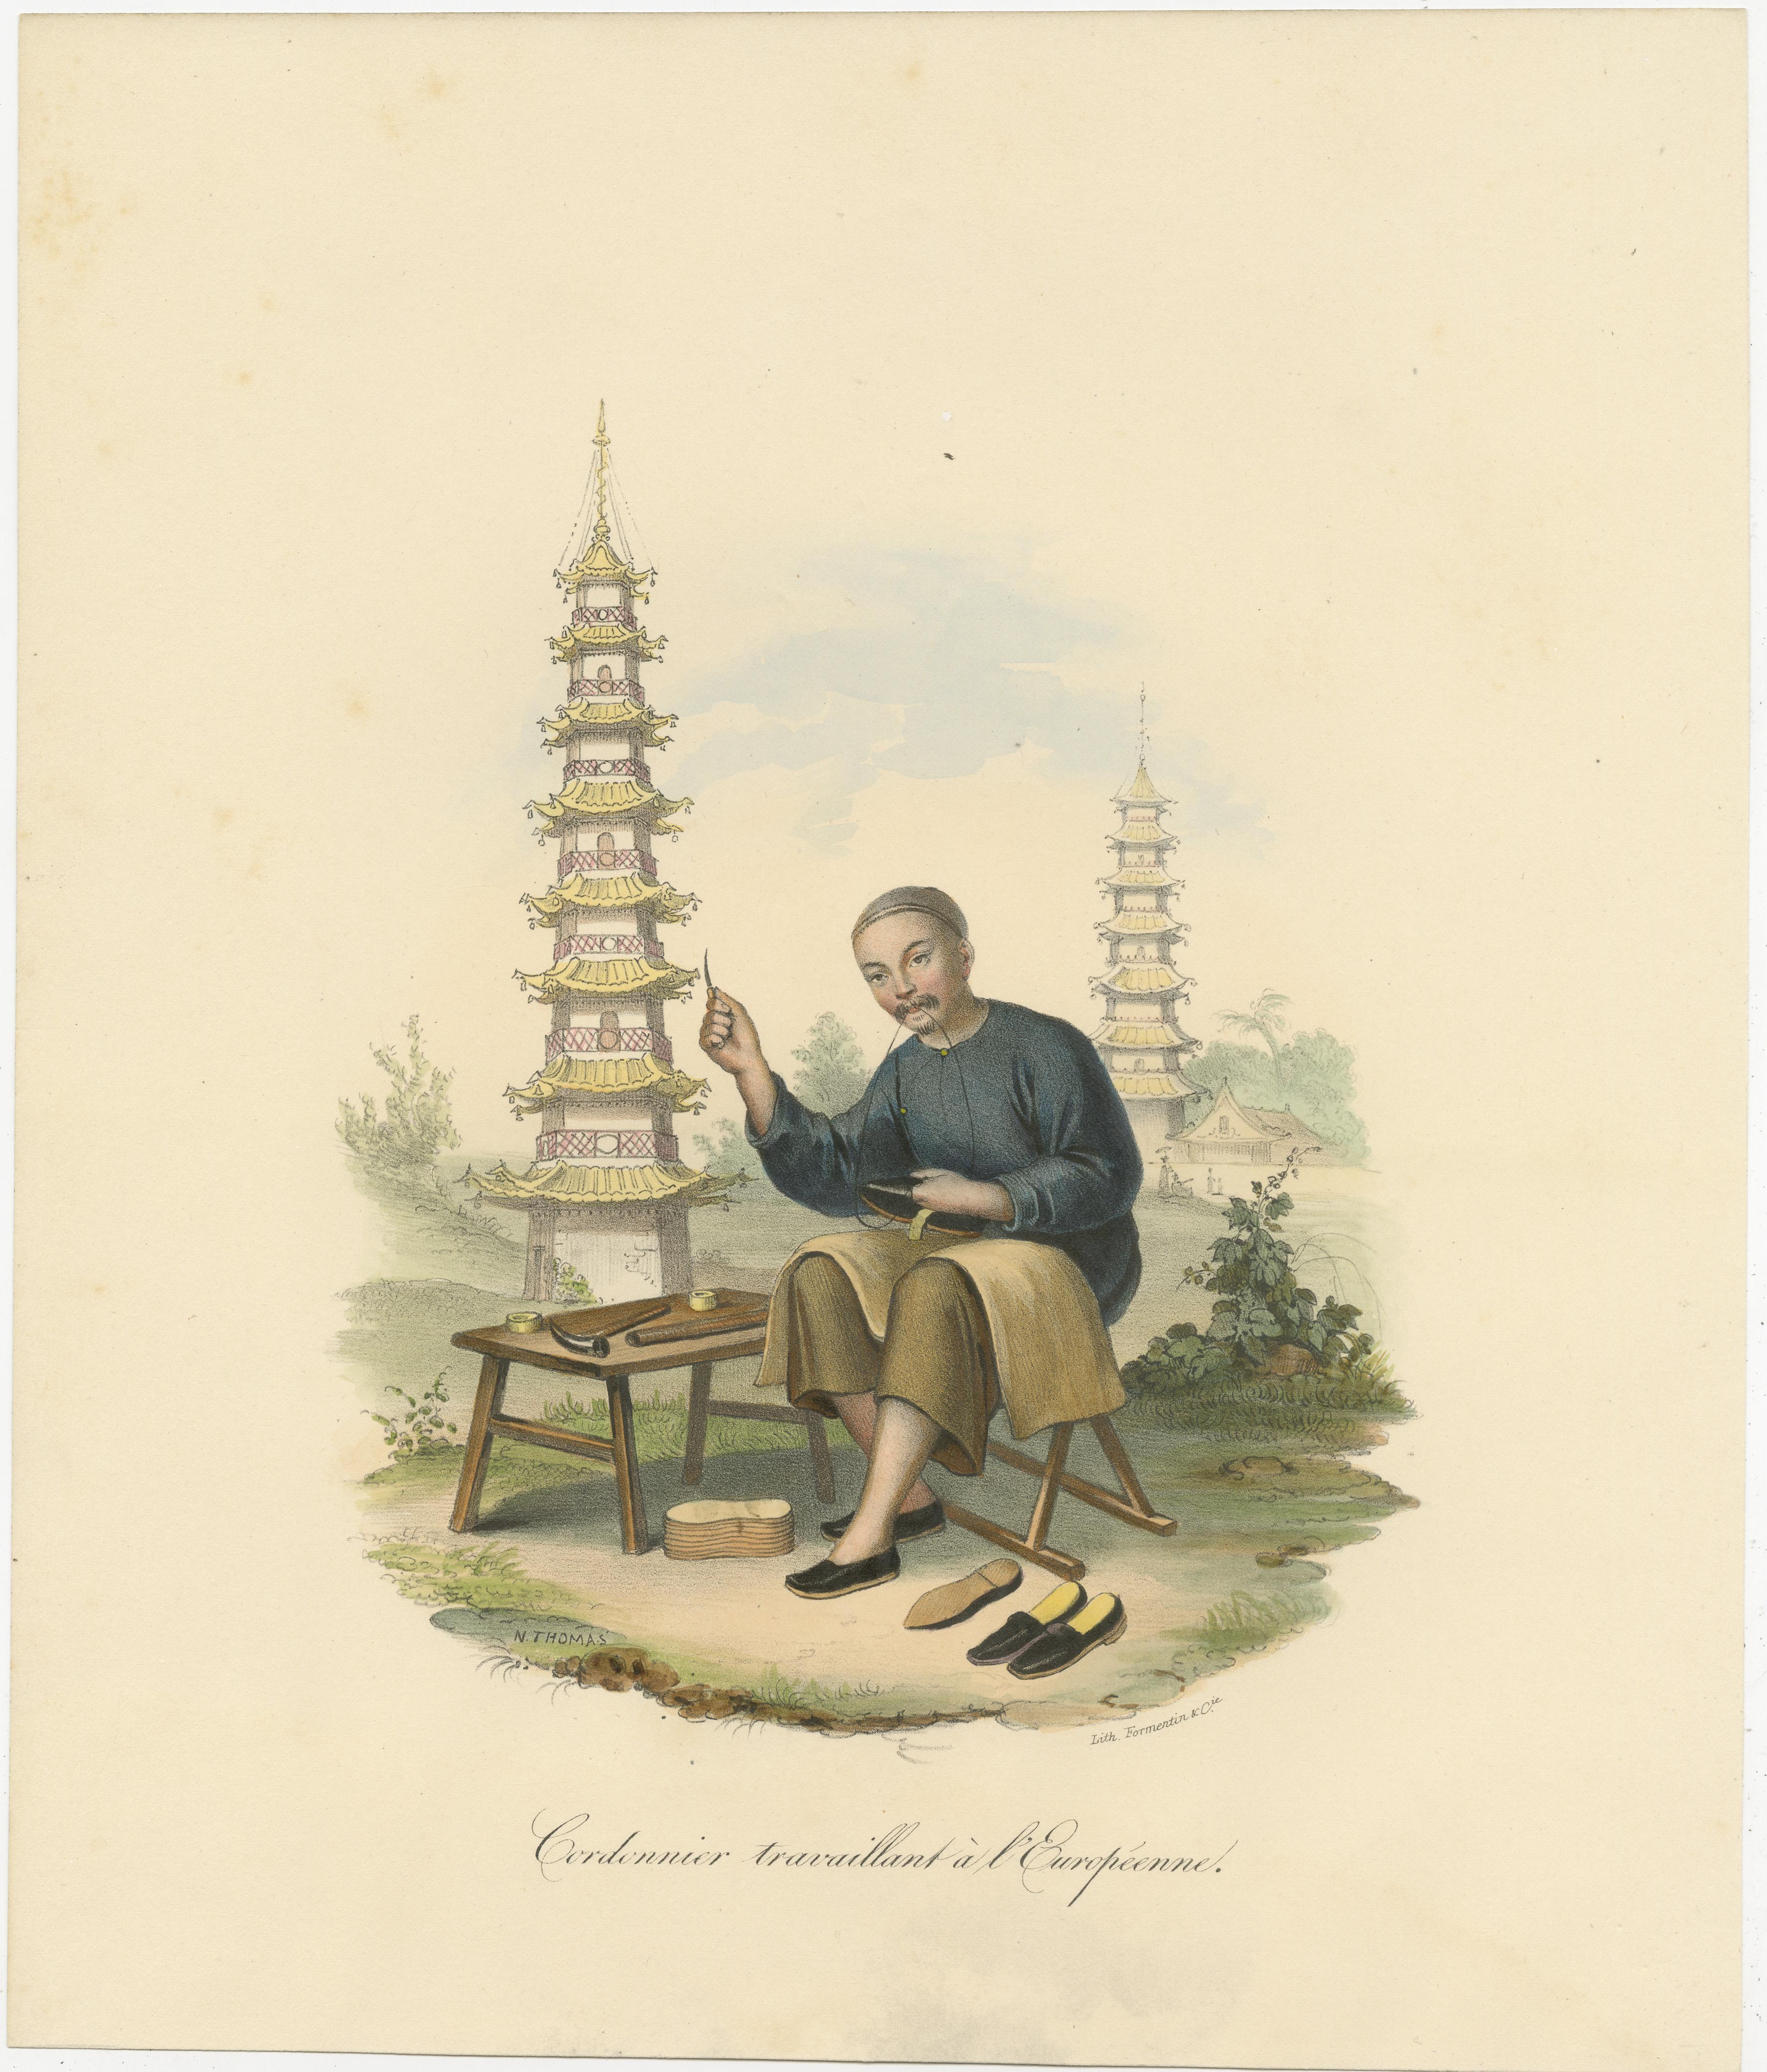 Antique print titled 'Cordonnier travaillant à l'Européenne'. Print of a Chinese shoemaker, European style. Published by Formentin & Cie, circa 1830.